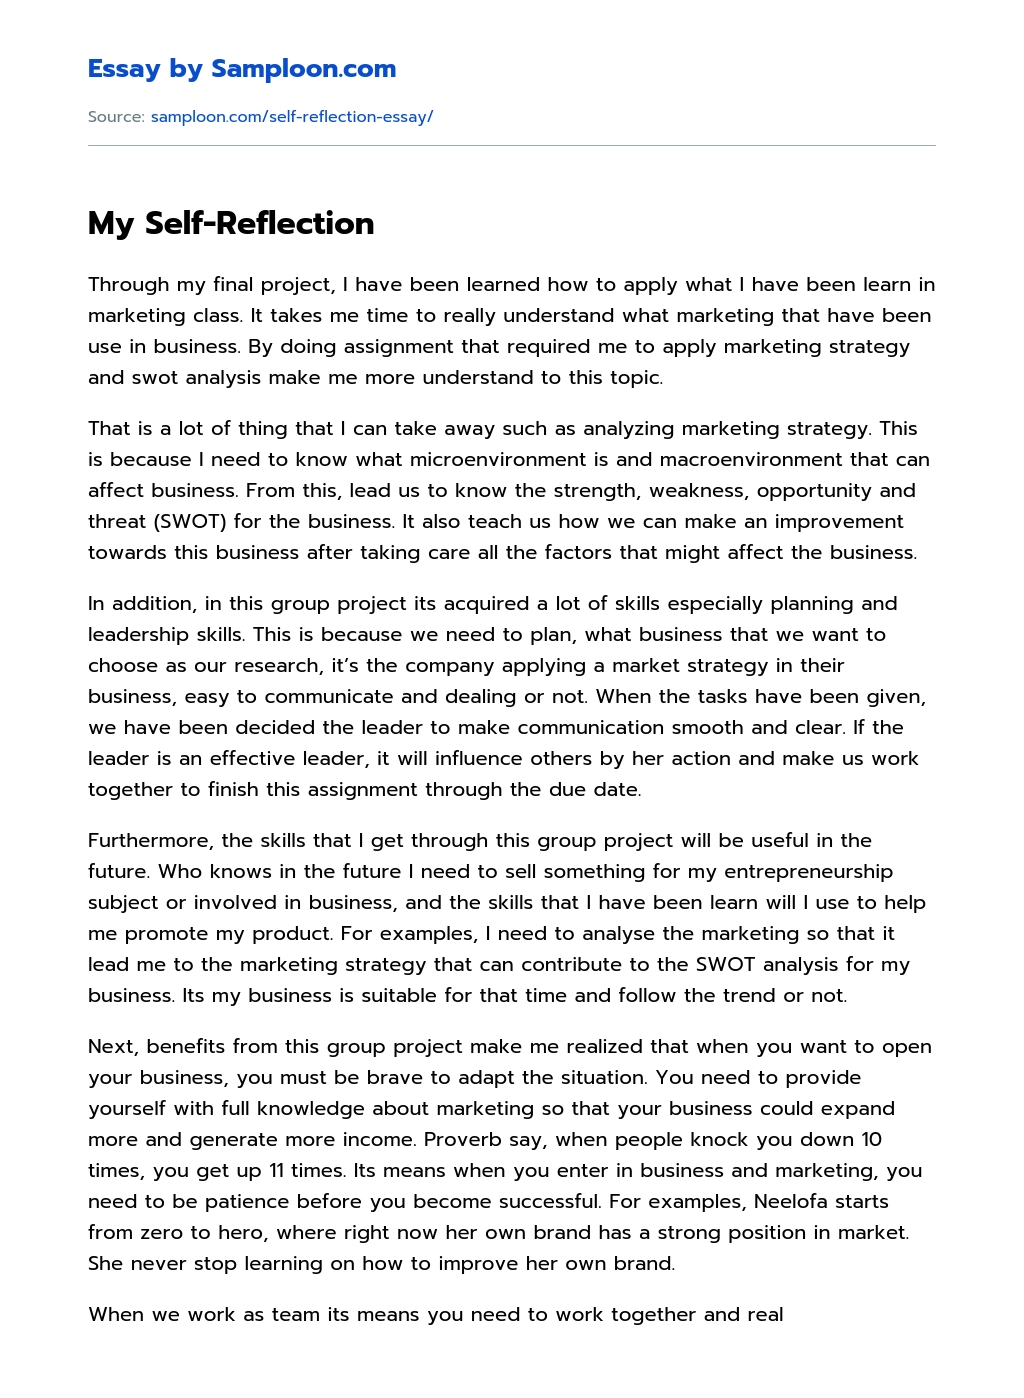 My Self-Reflection essay